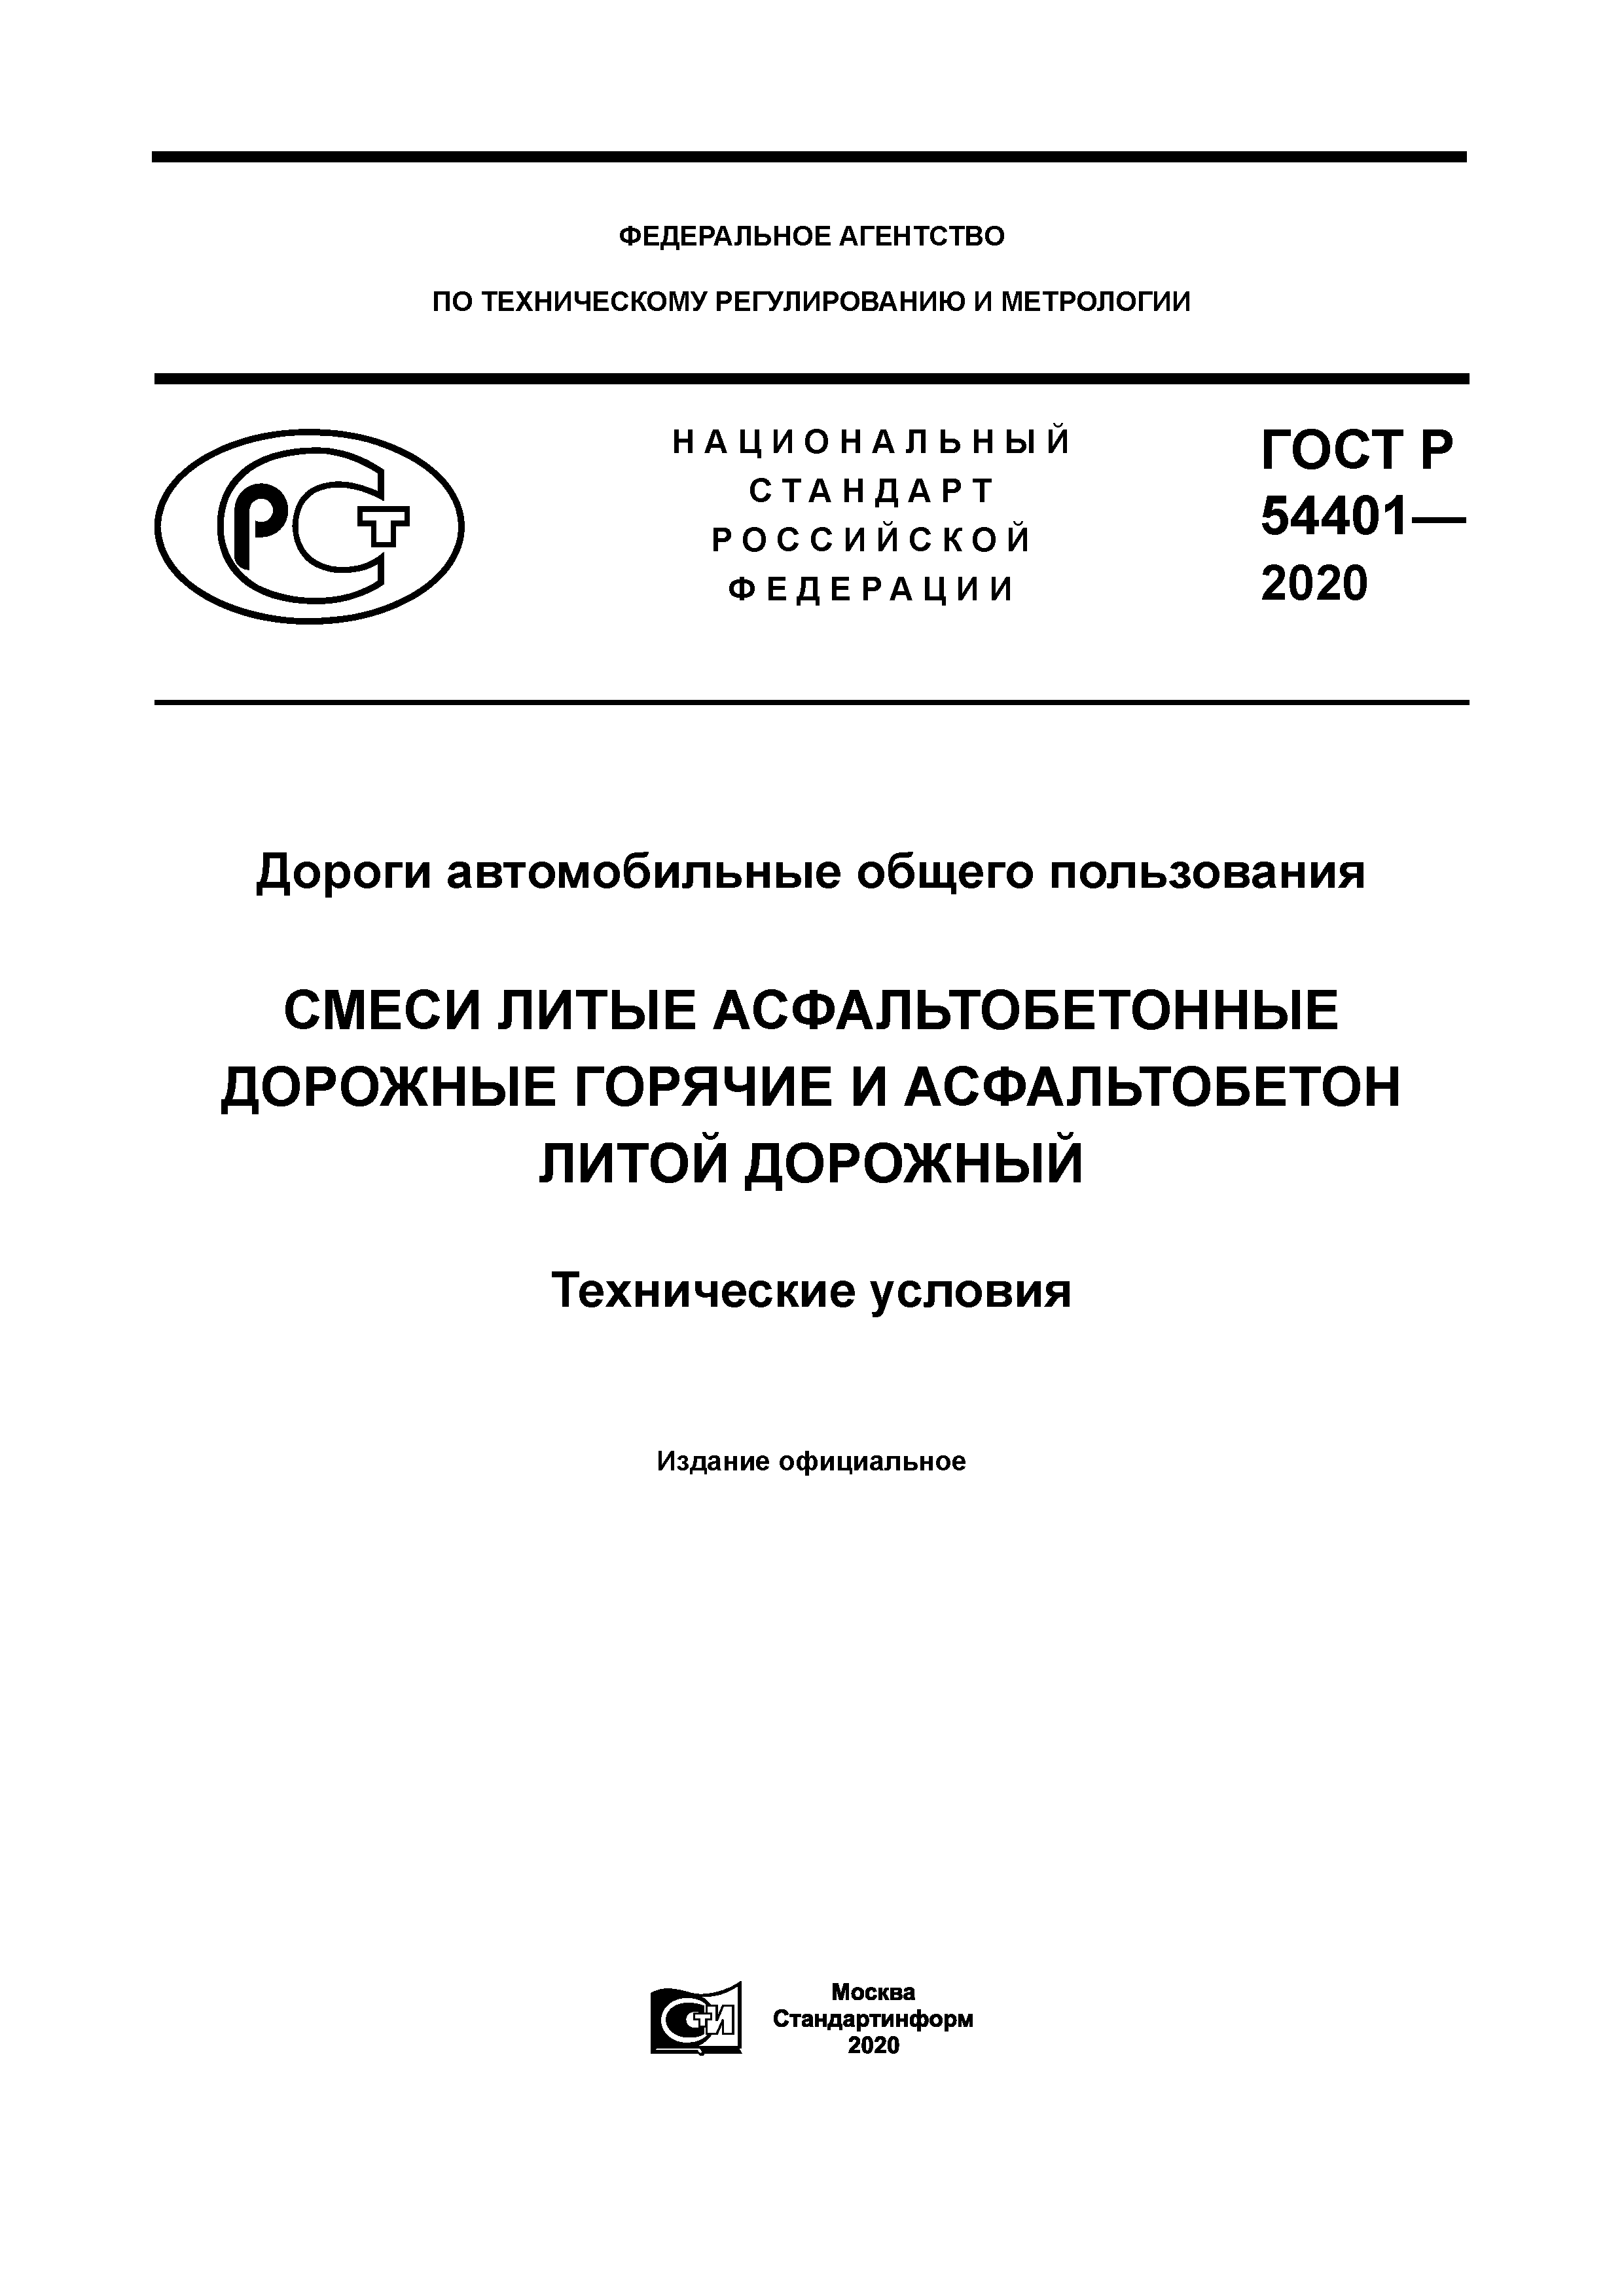 ГОСТ Р 54401-2020